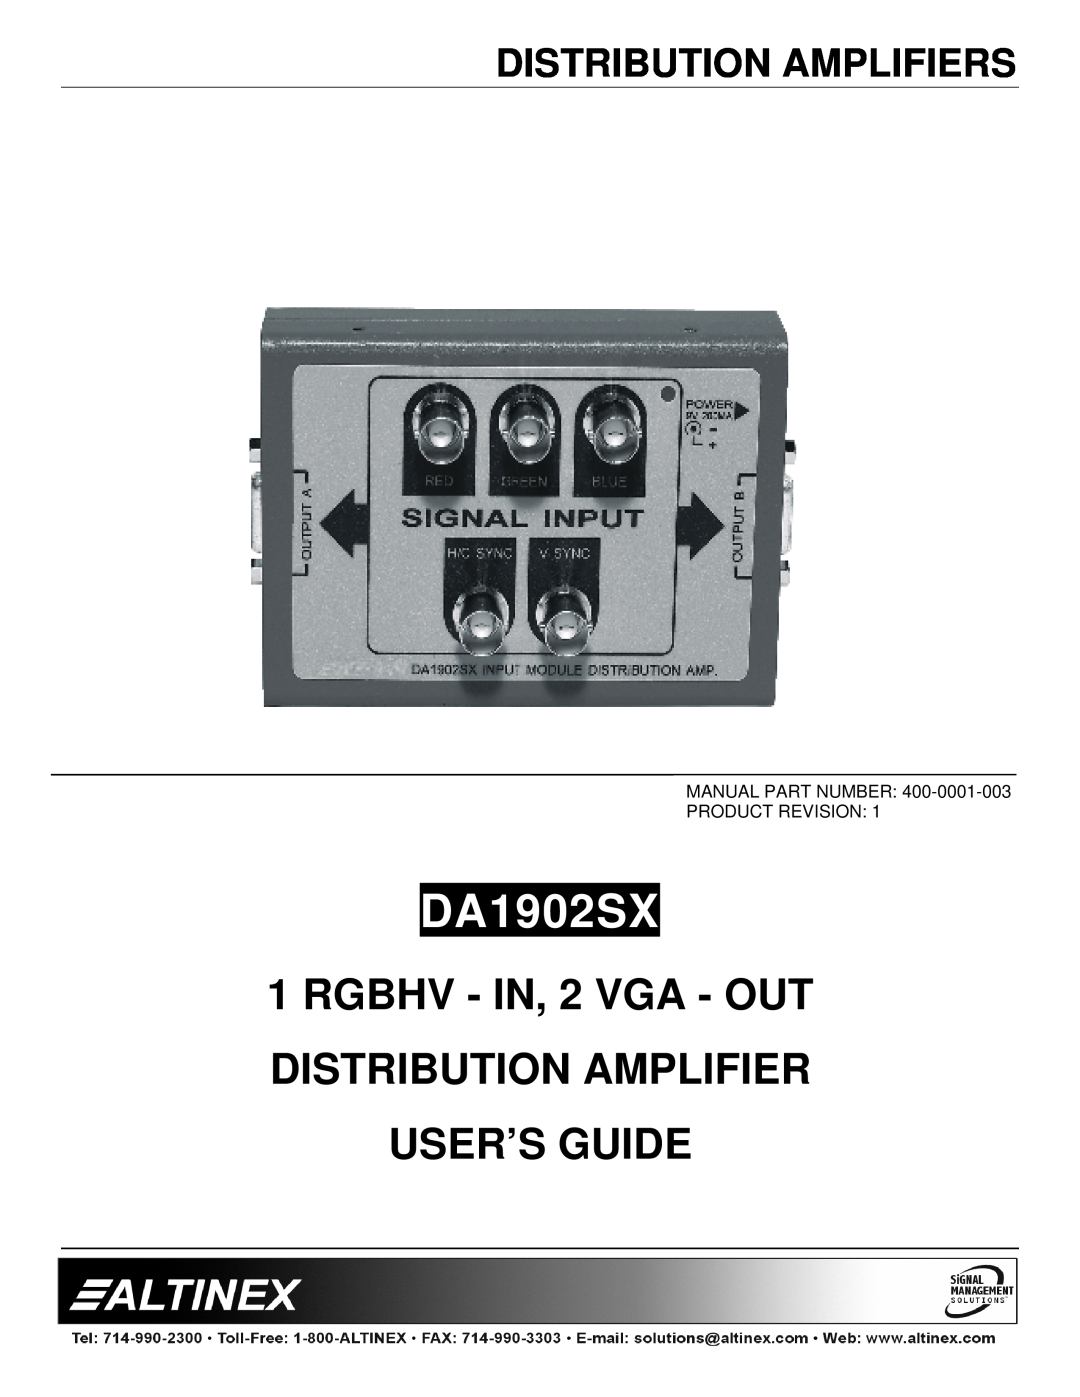 Altinex DA1902SX manual Distribution Amplifiers, RGBHV - IN, 2 VGA - OUT DISTRIBUTION AMPLIFIER, User’S Guide 